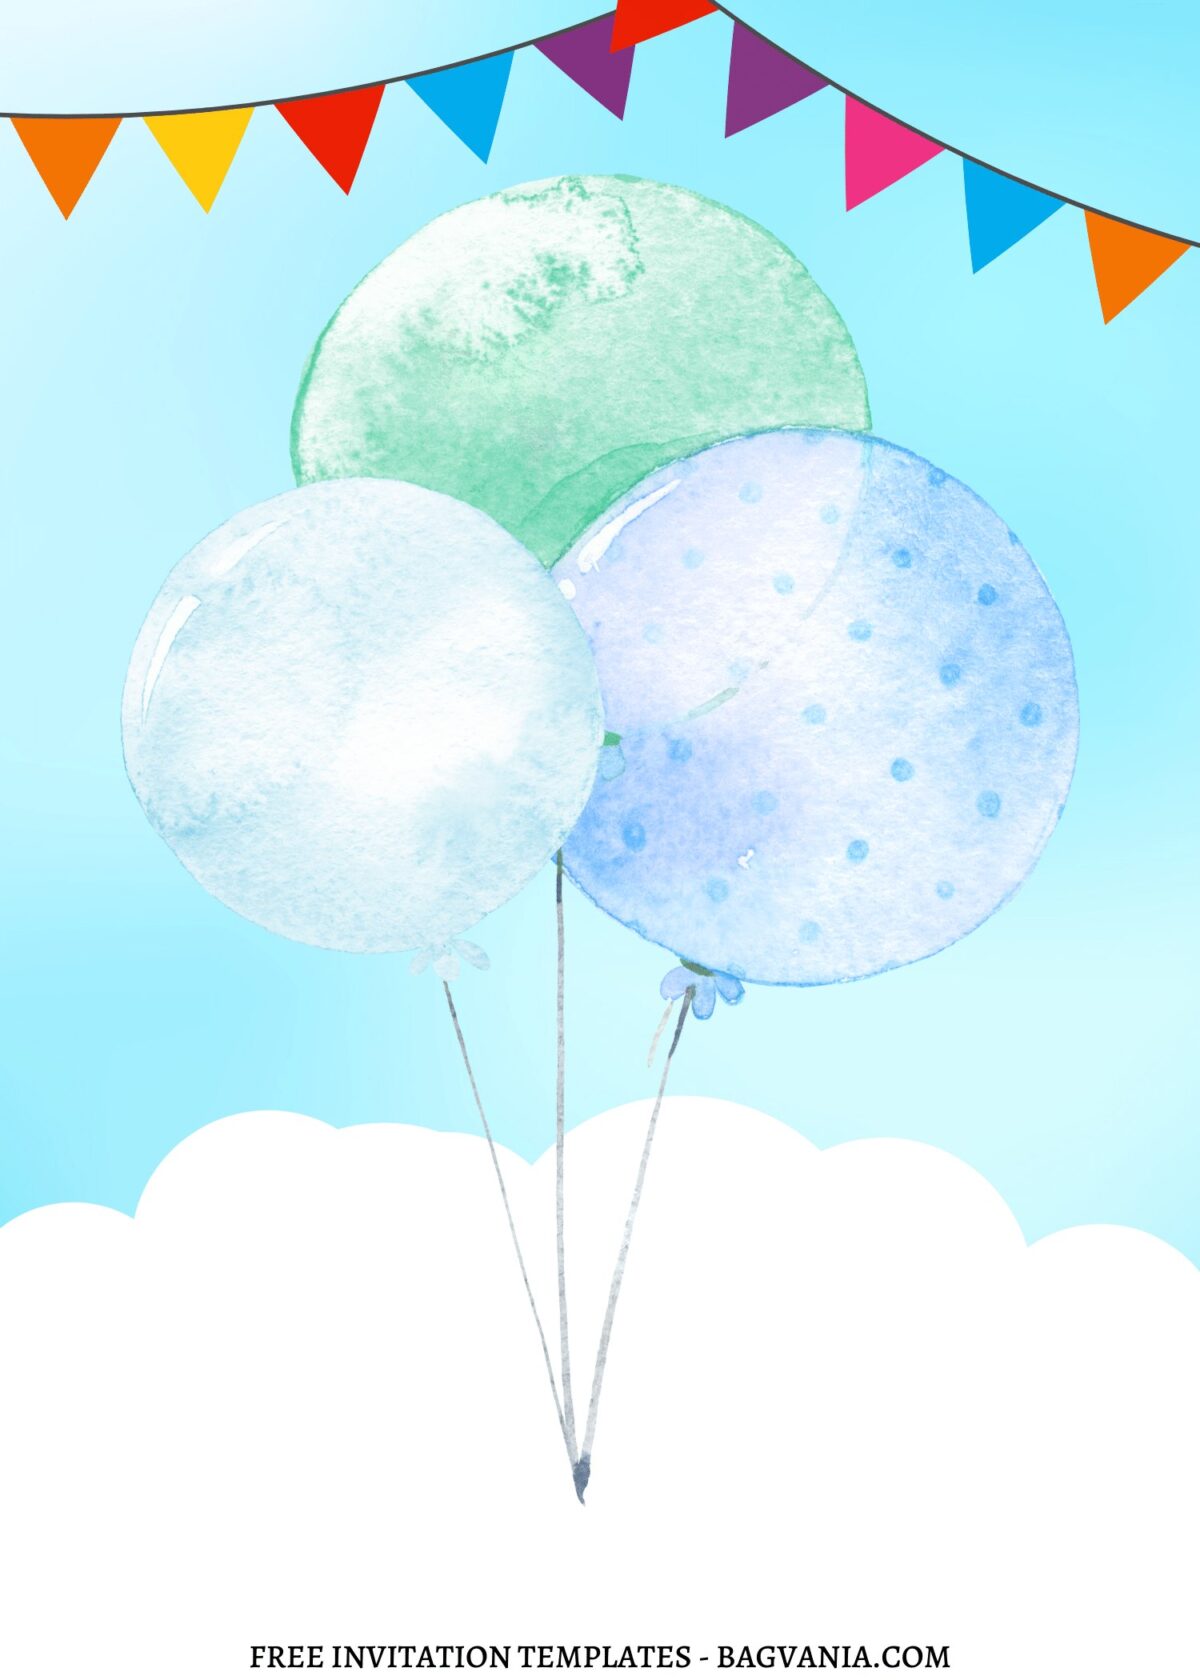 FREE EDITABLE - 10+ Safari Hot Air Balloon Canva Birthday Invitation Templates with watercolor balloons